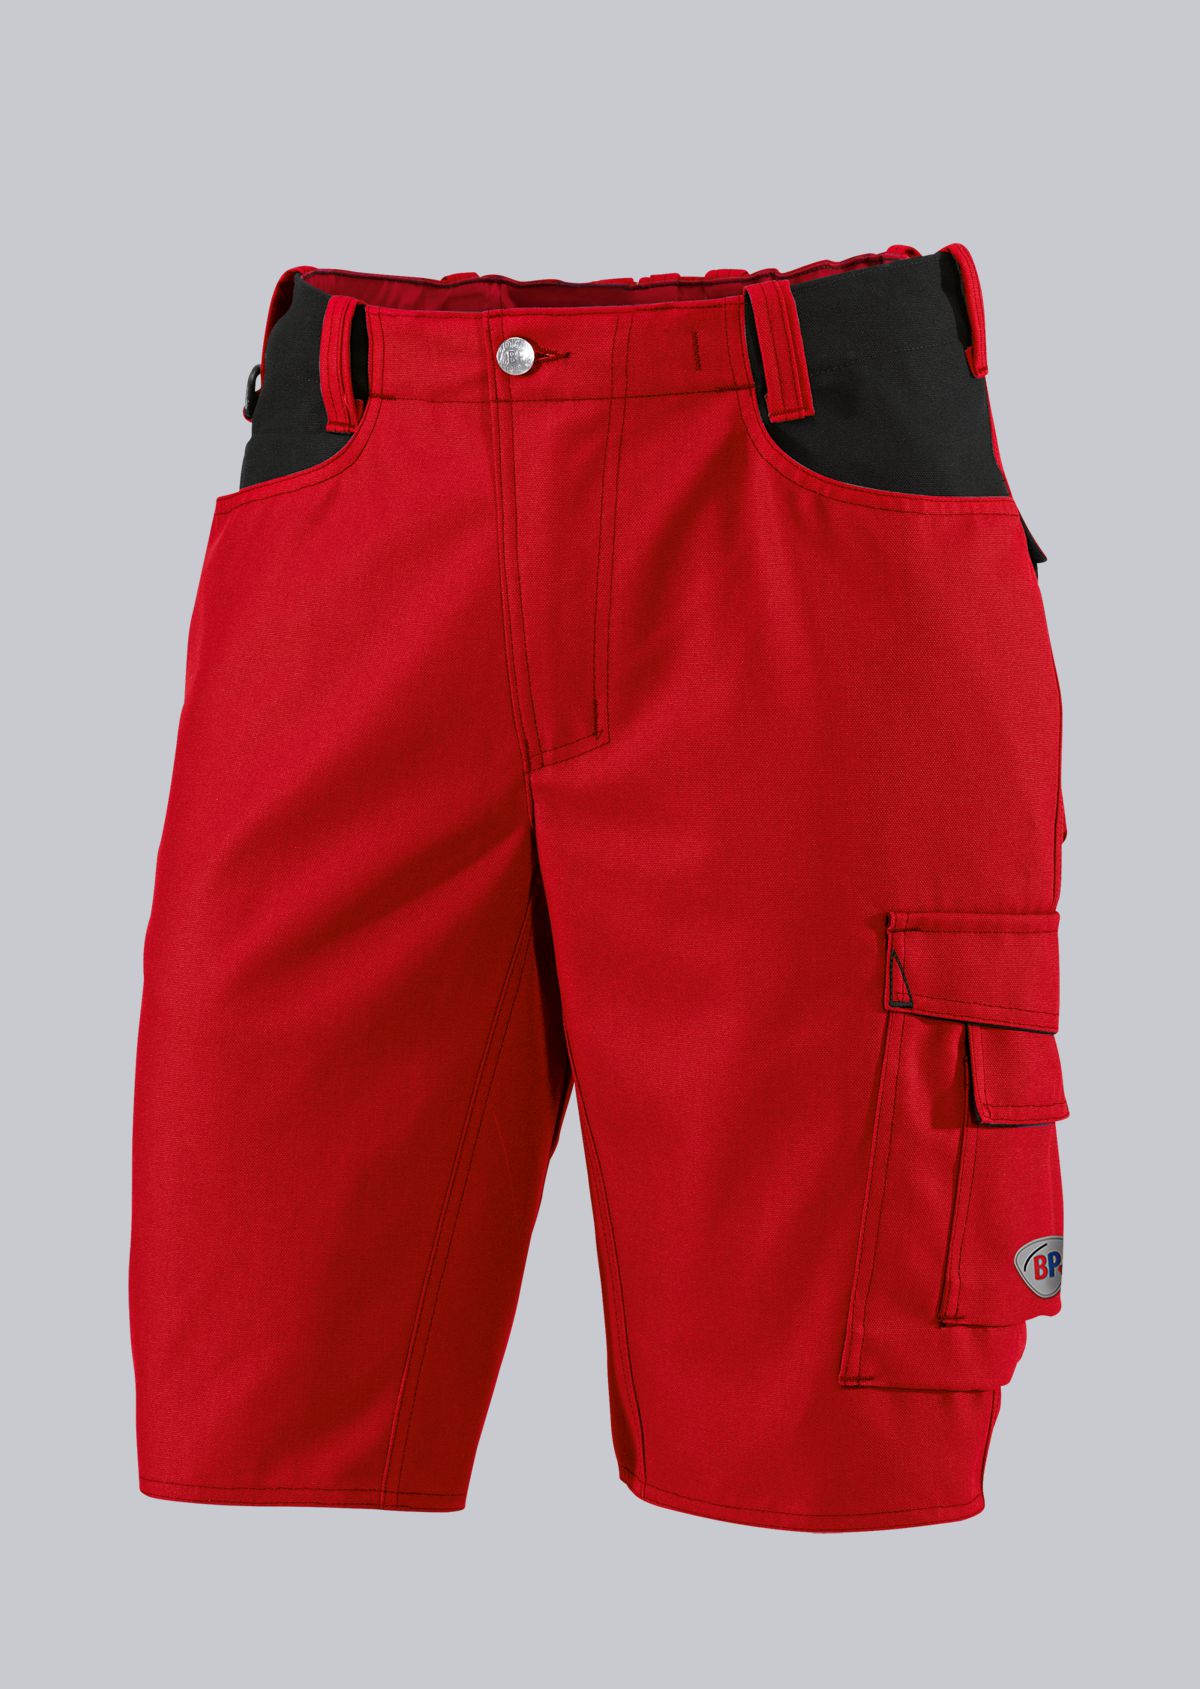 BP® Durable shorts